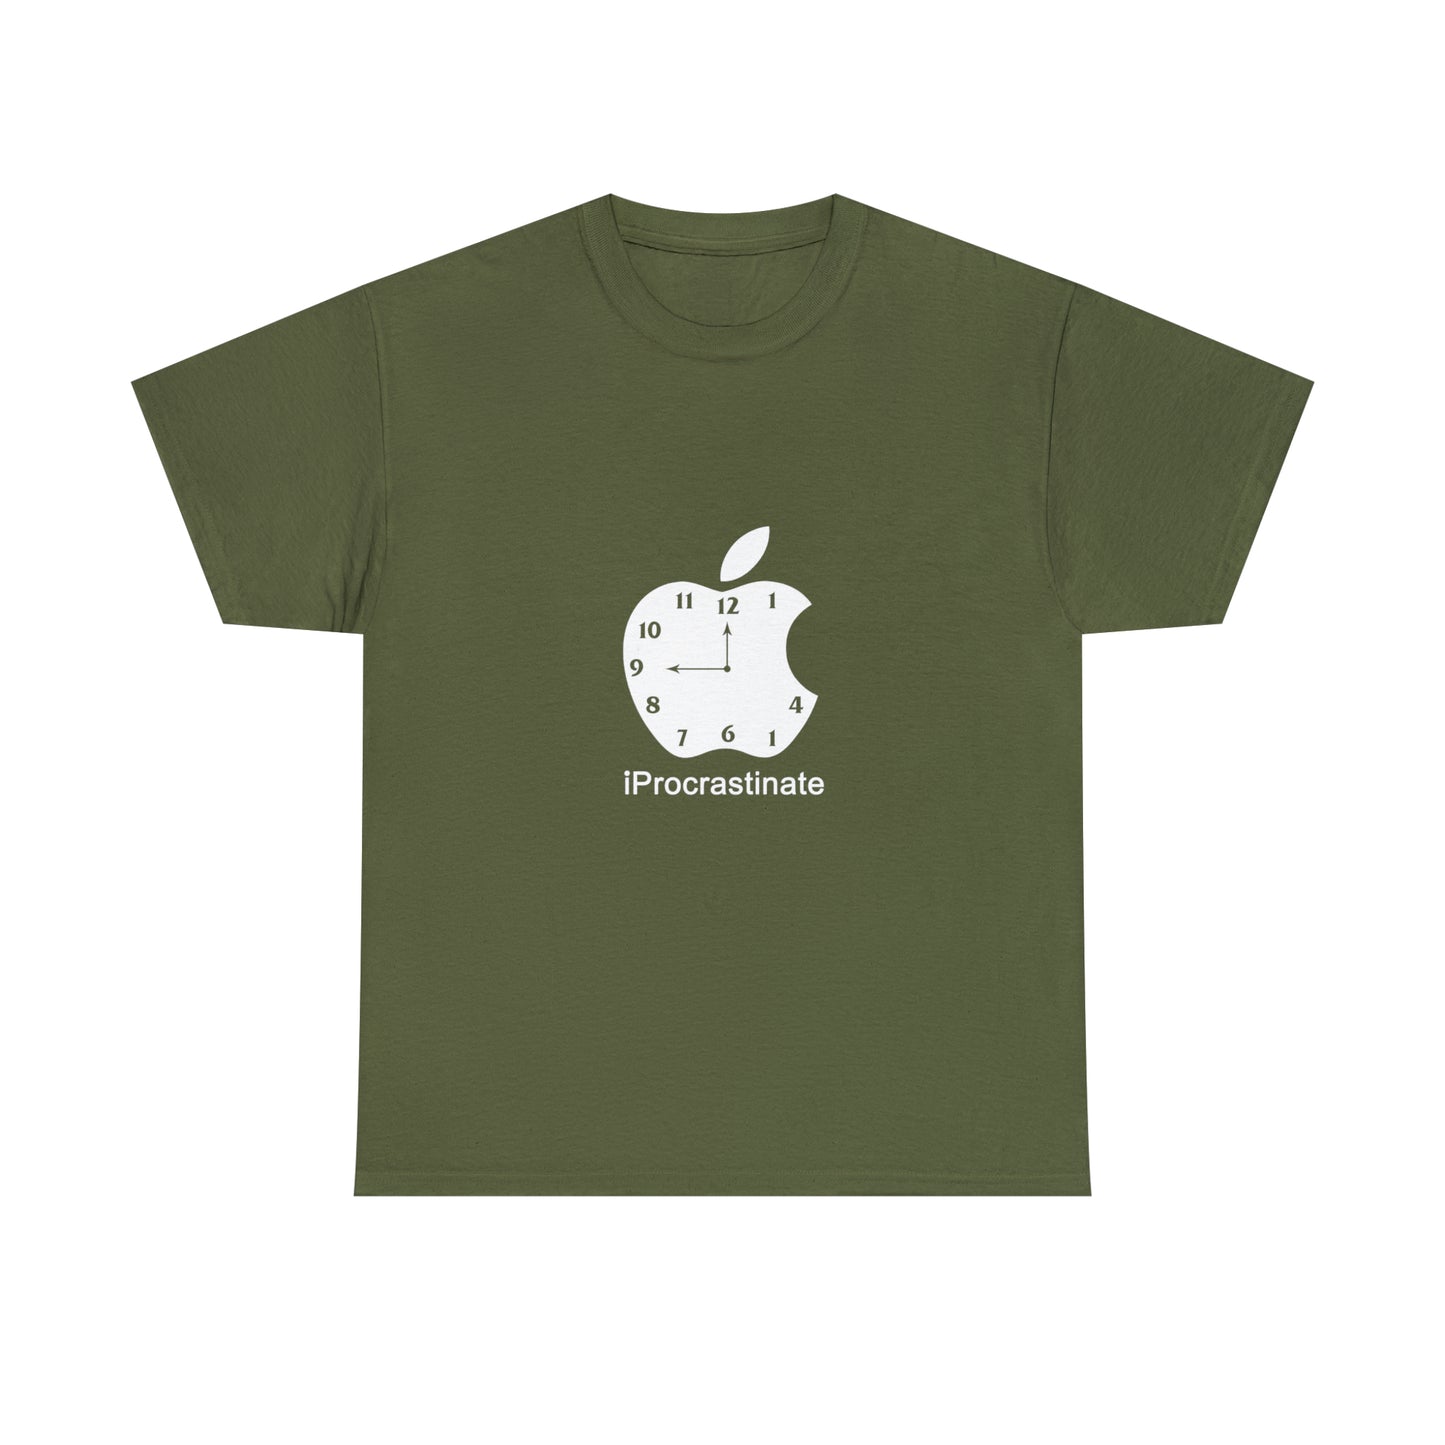 Custom Parody T-shirt, iProcrastinate design